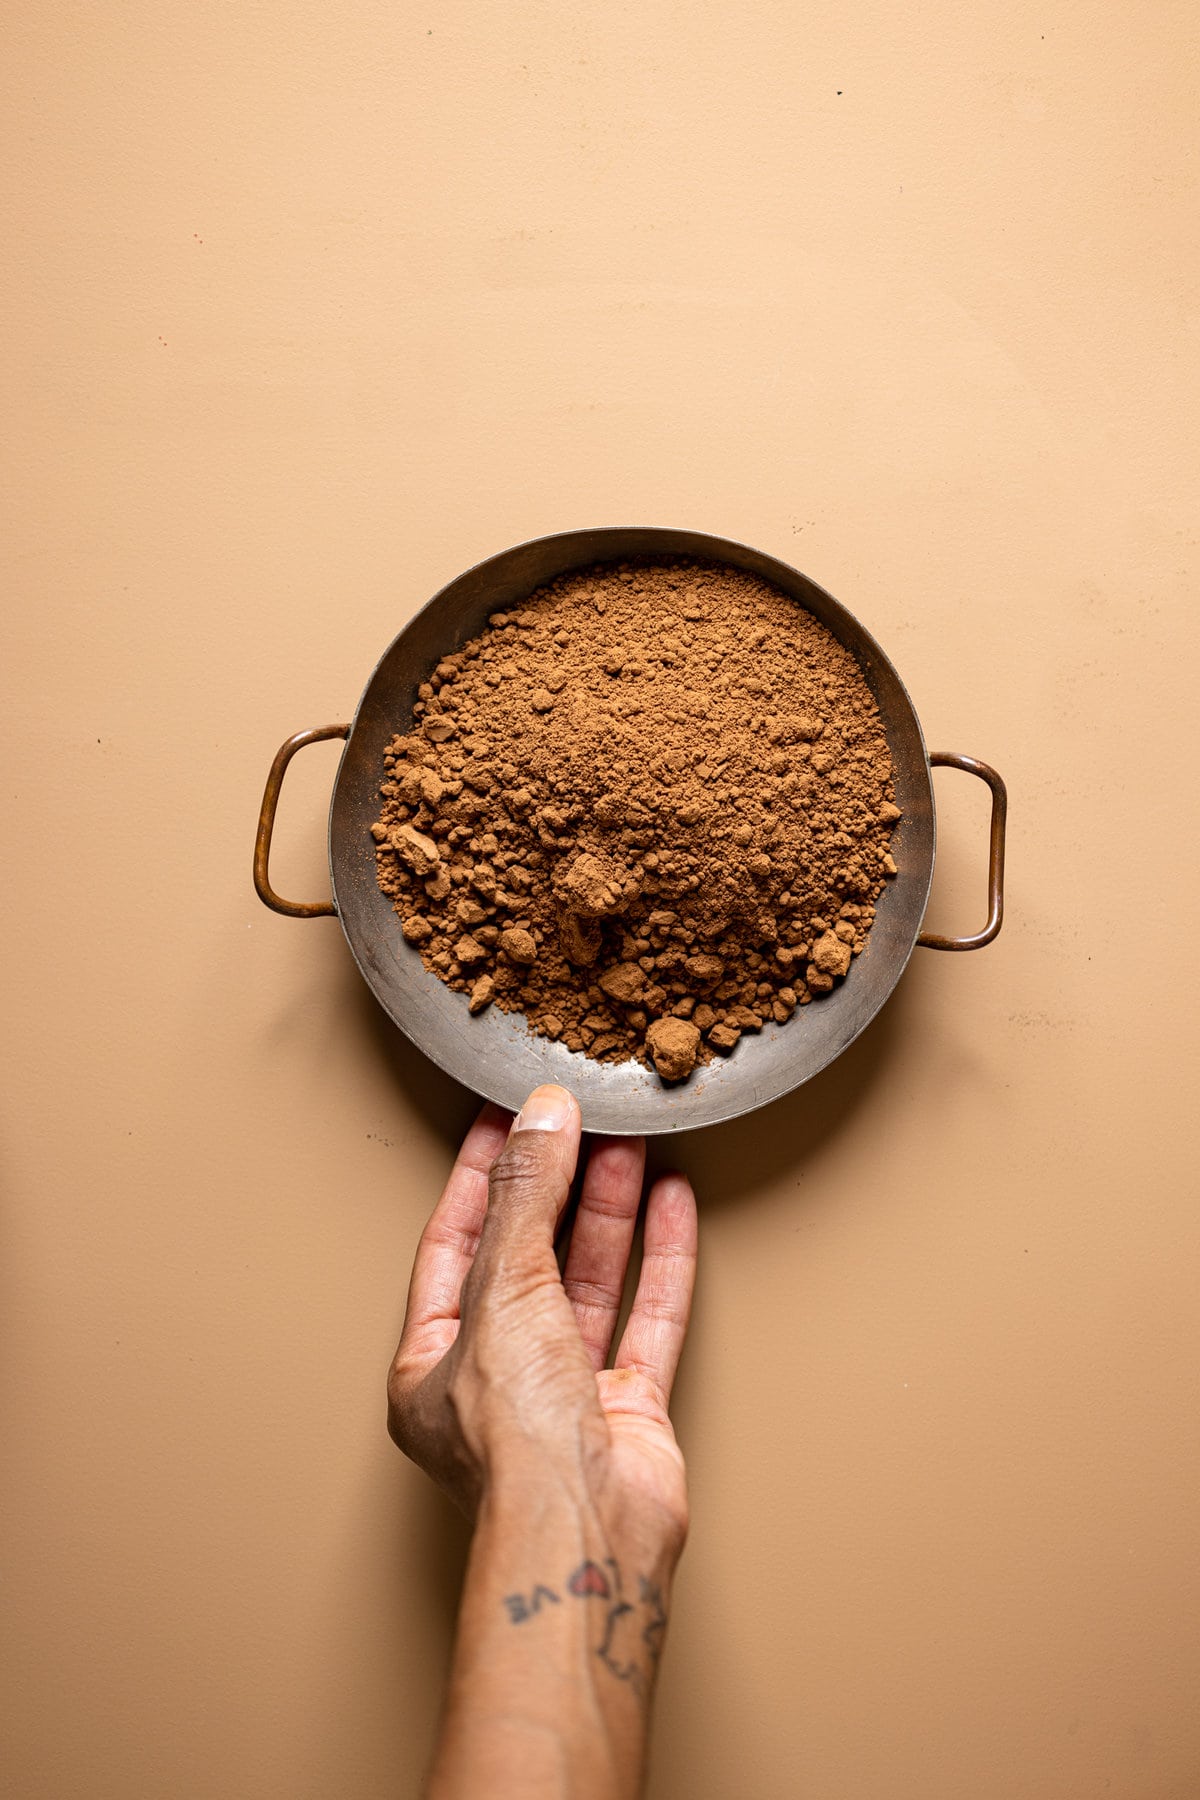 Metal bowl of cocoa powder